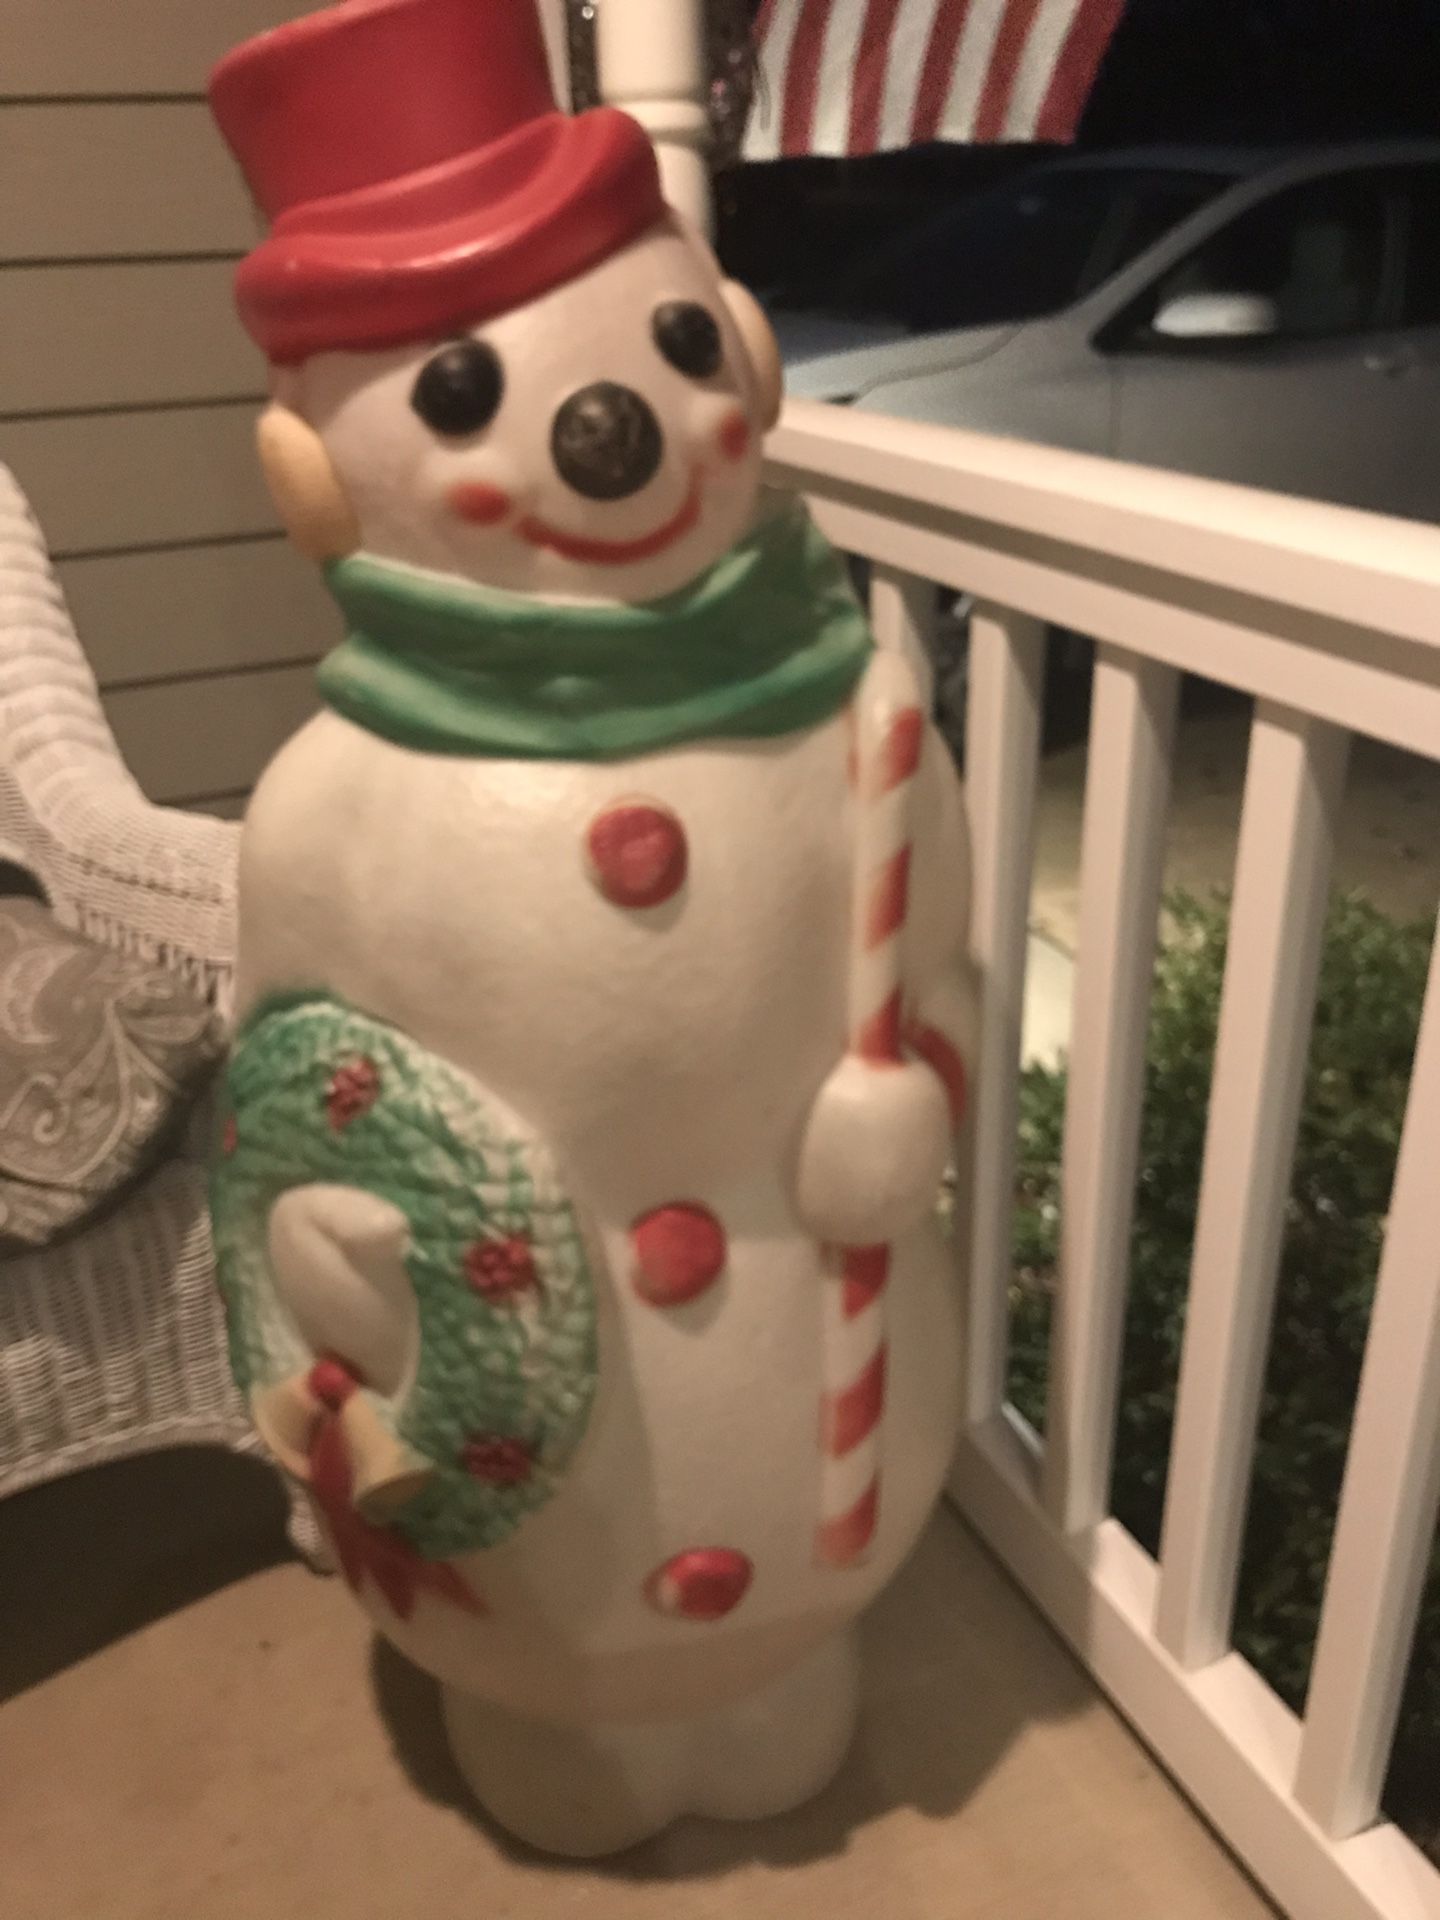 Plastic snowman